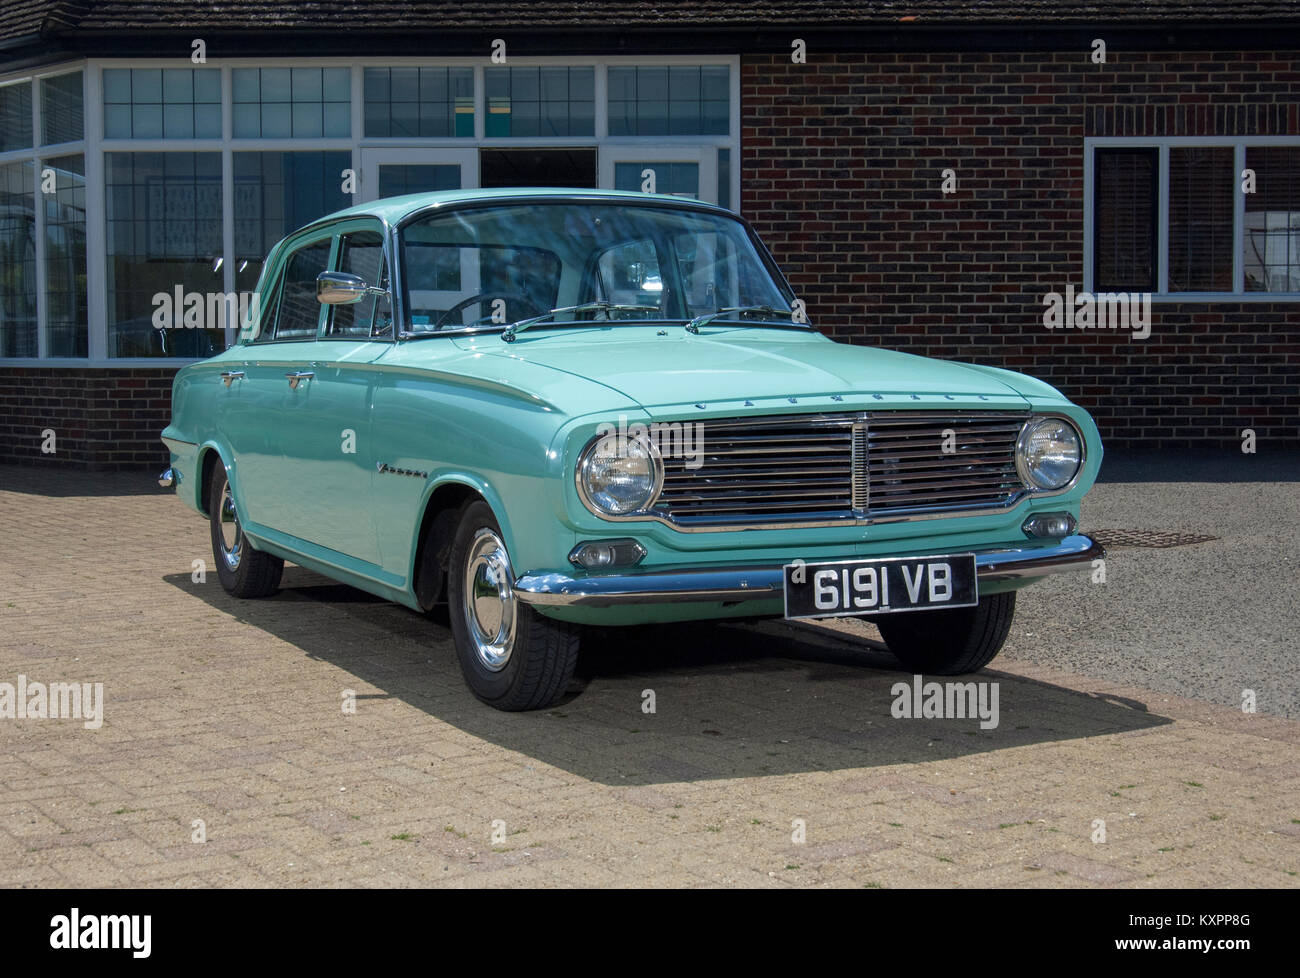 1963 Vauxhall Victor classic British family car Stock Photo